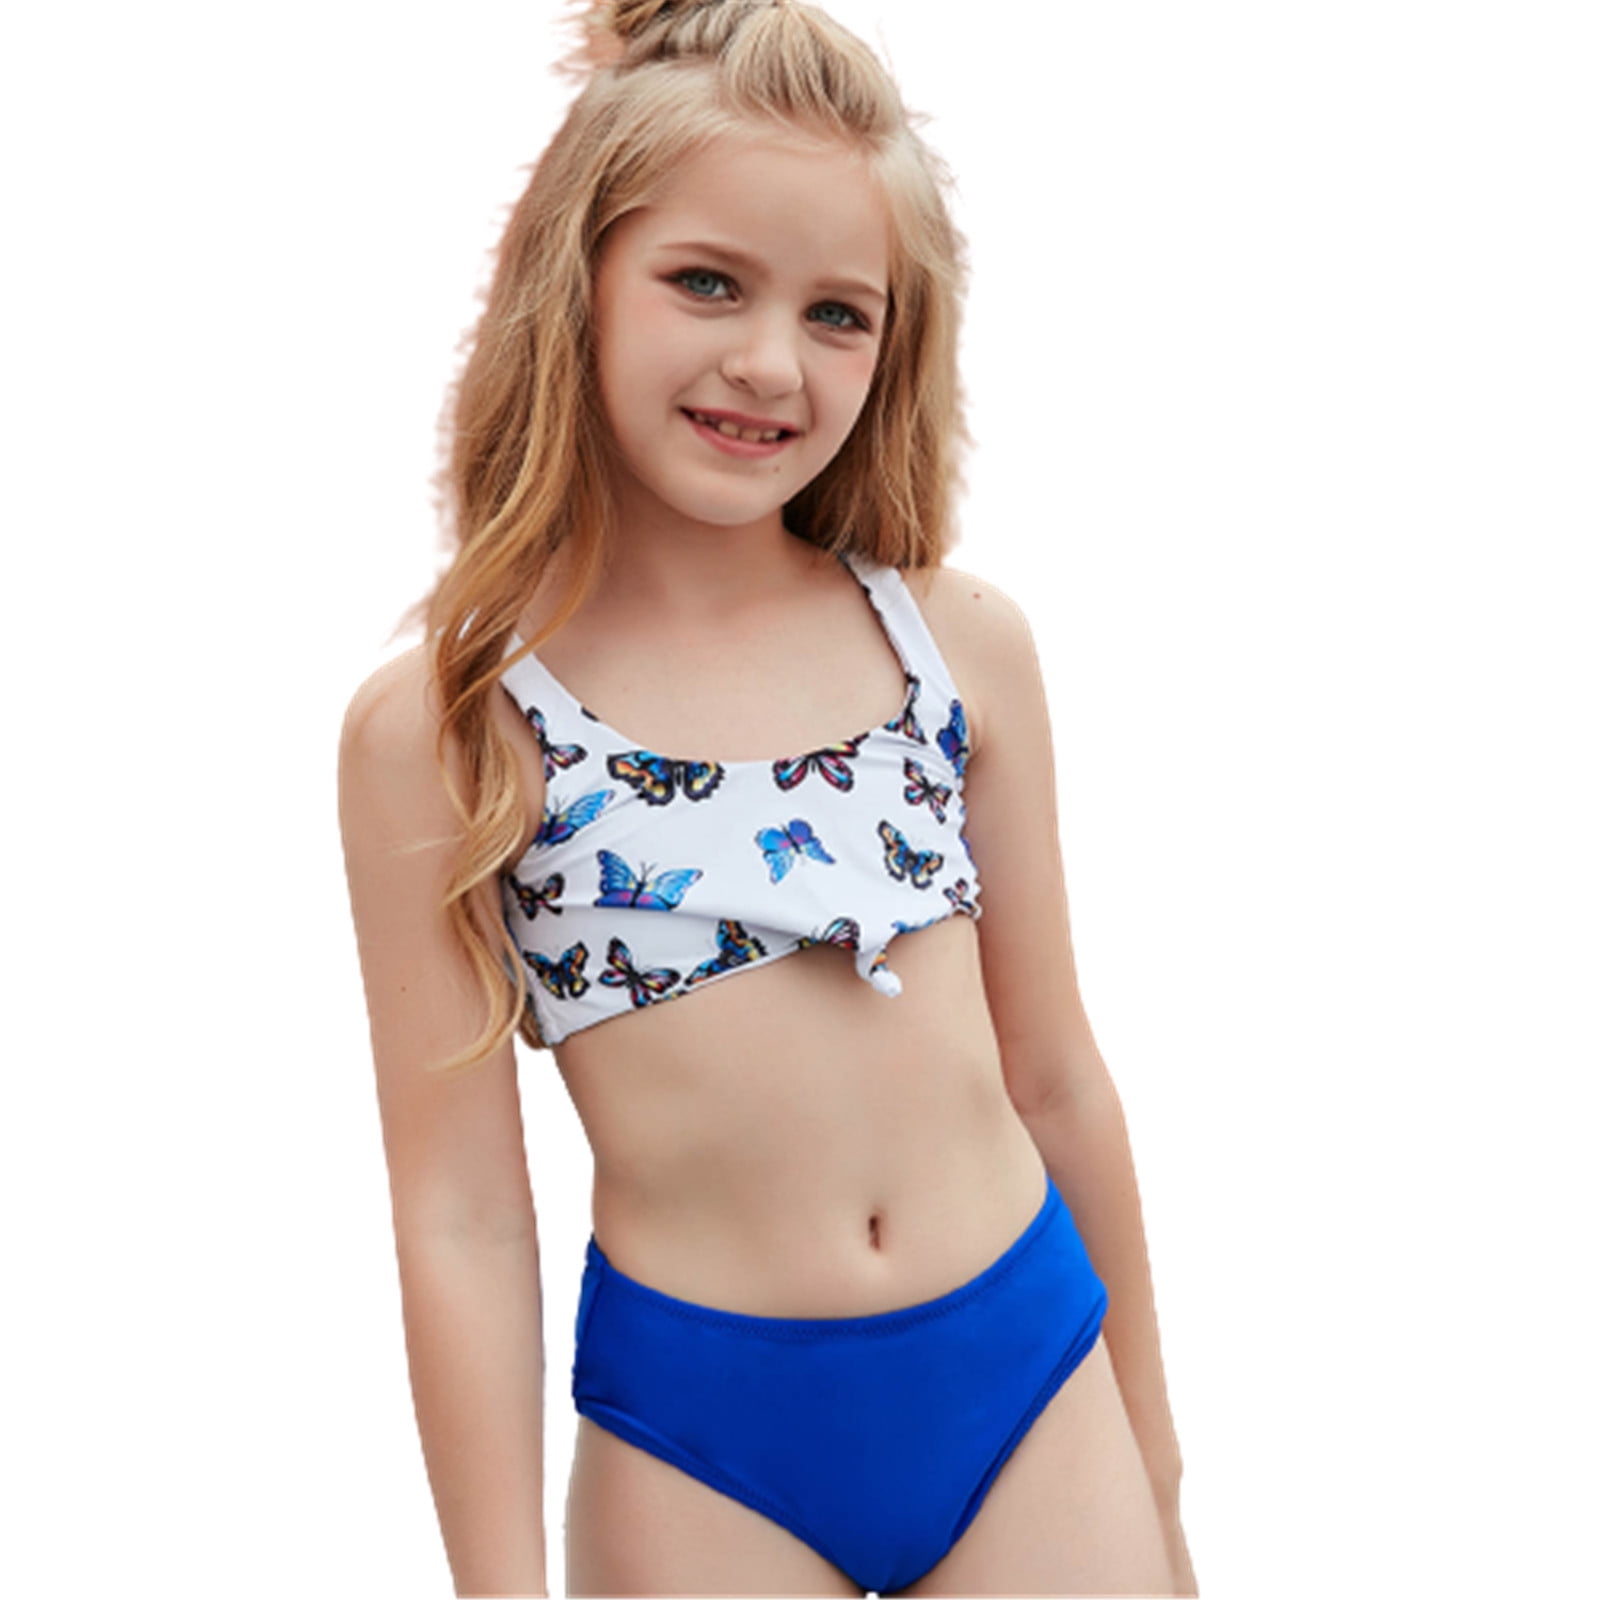 Kids Swim Suit Big Girls Swimsuits Size Girls Holiday Cute